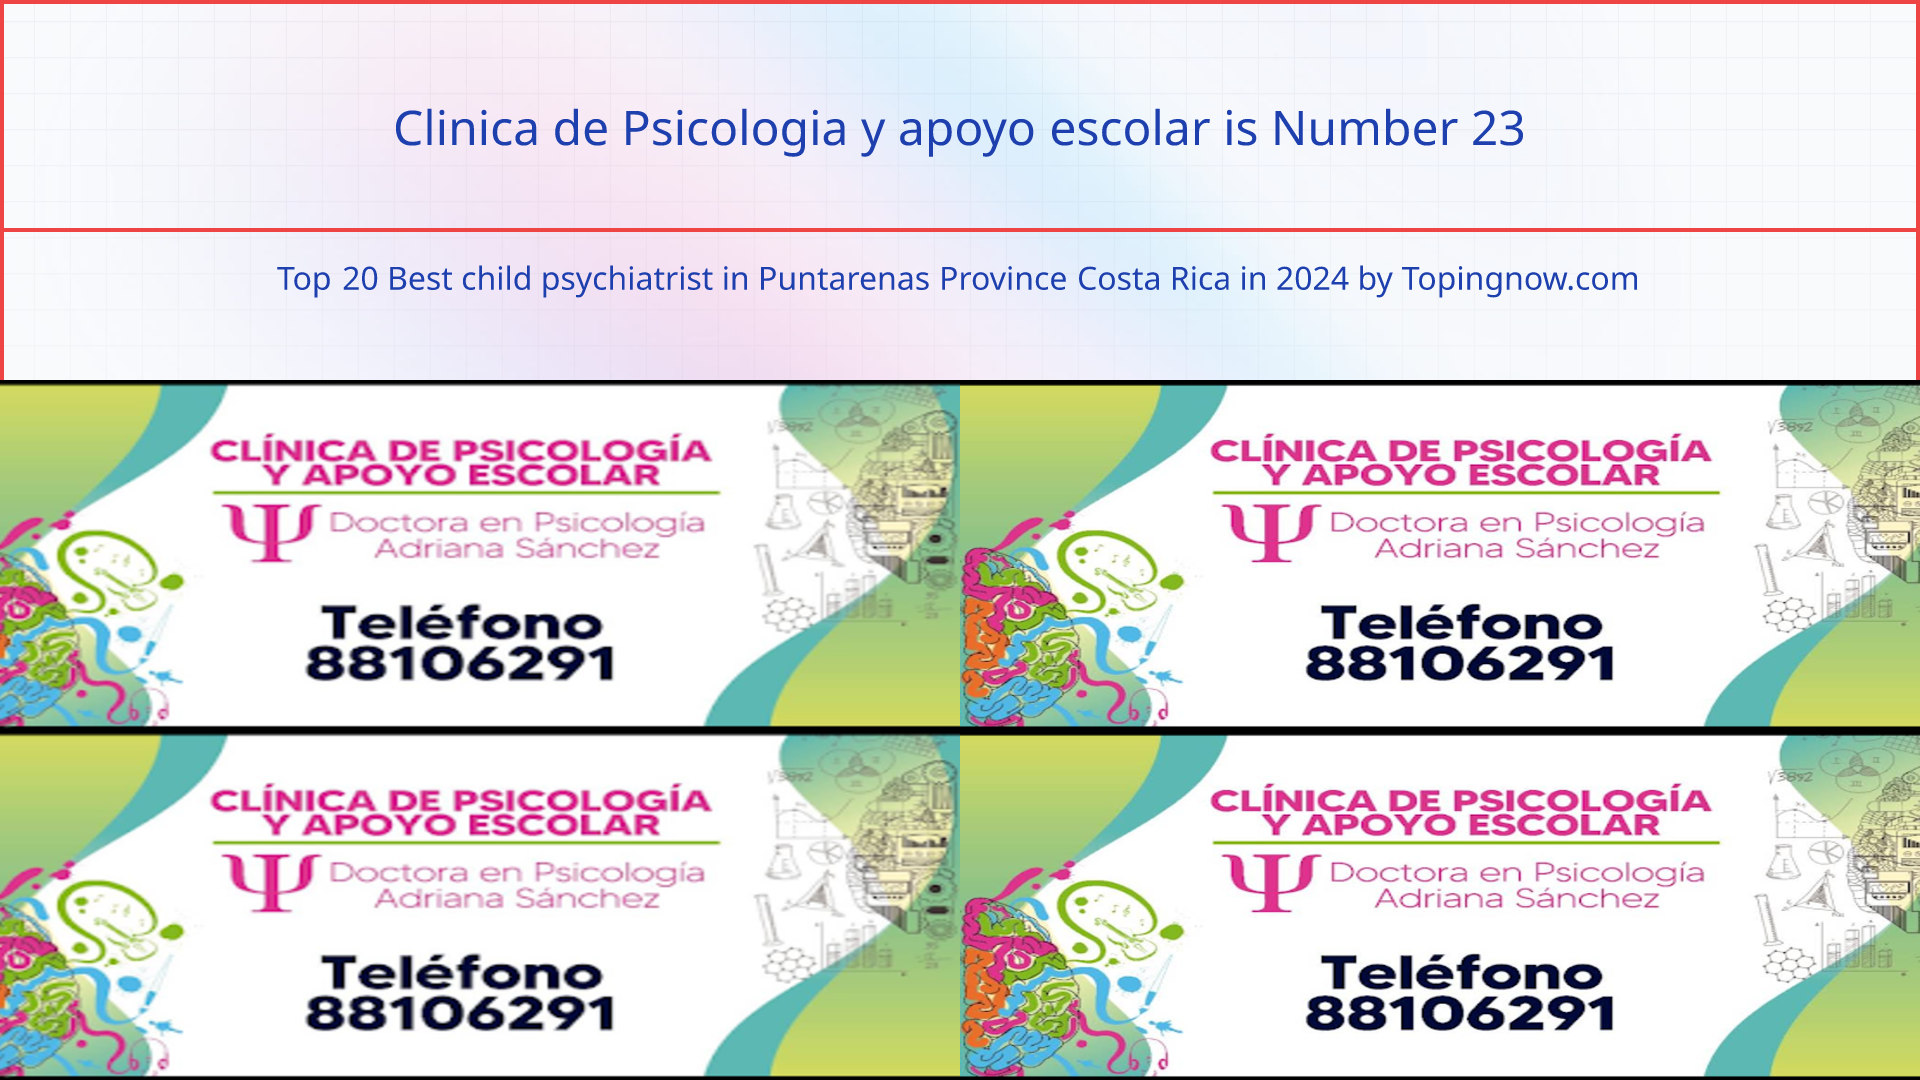 Clinica de Psicologia y apoyo escolar: Top 20 Best child psychiatrist in Puntarenas Province Costa Rica in 2024